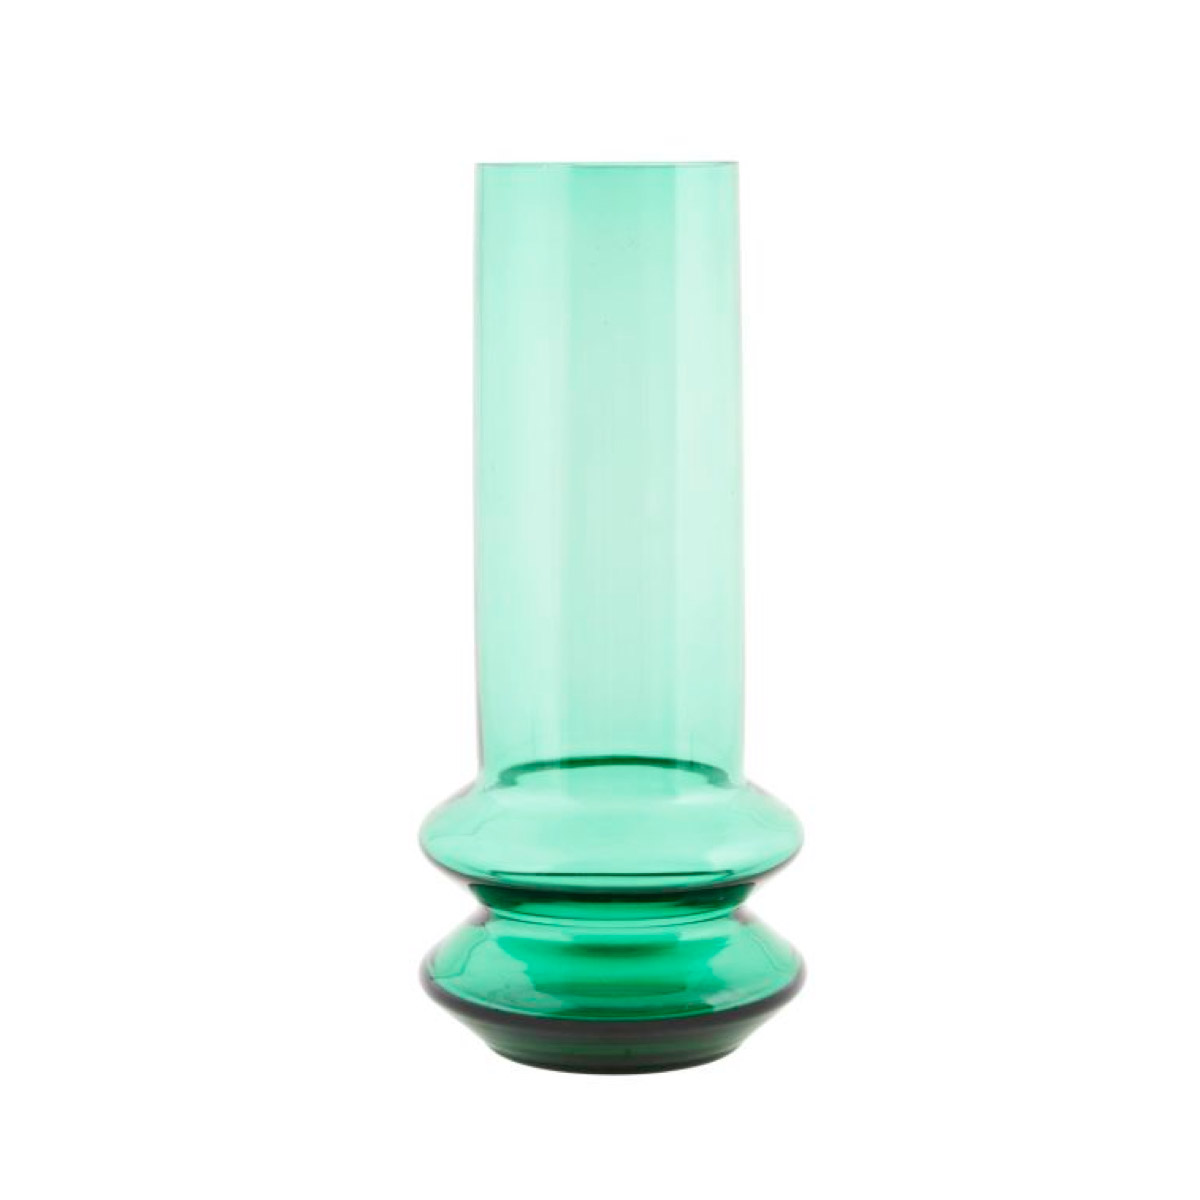 Tall emerald green vase